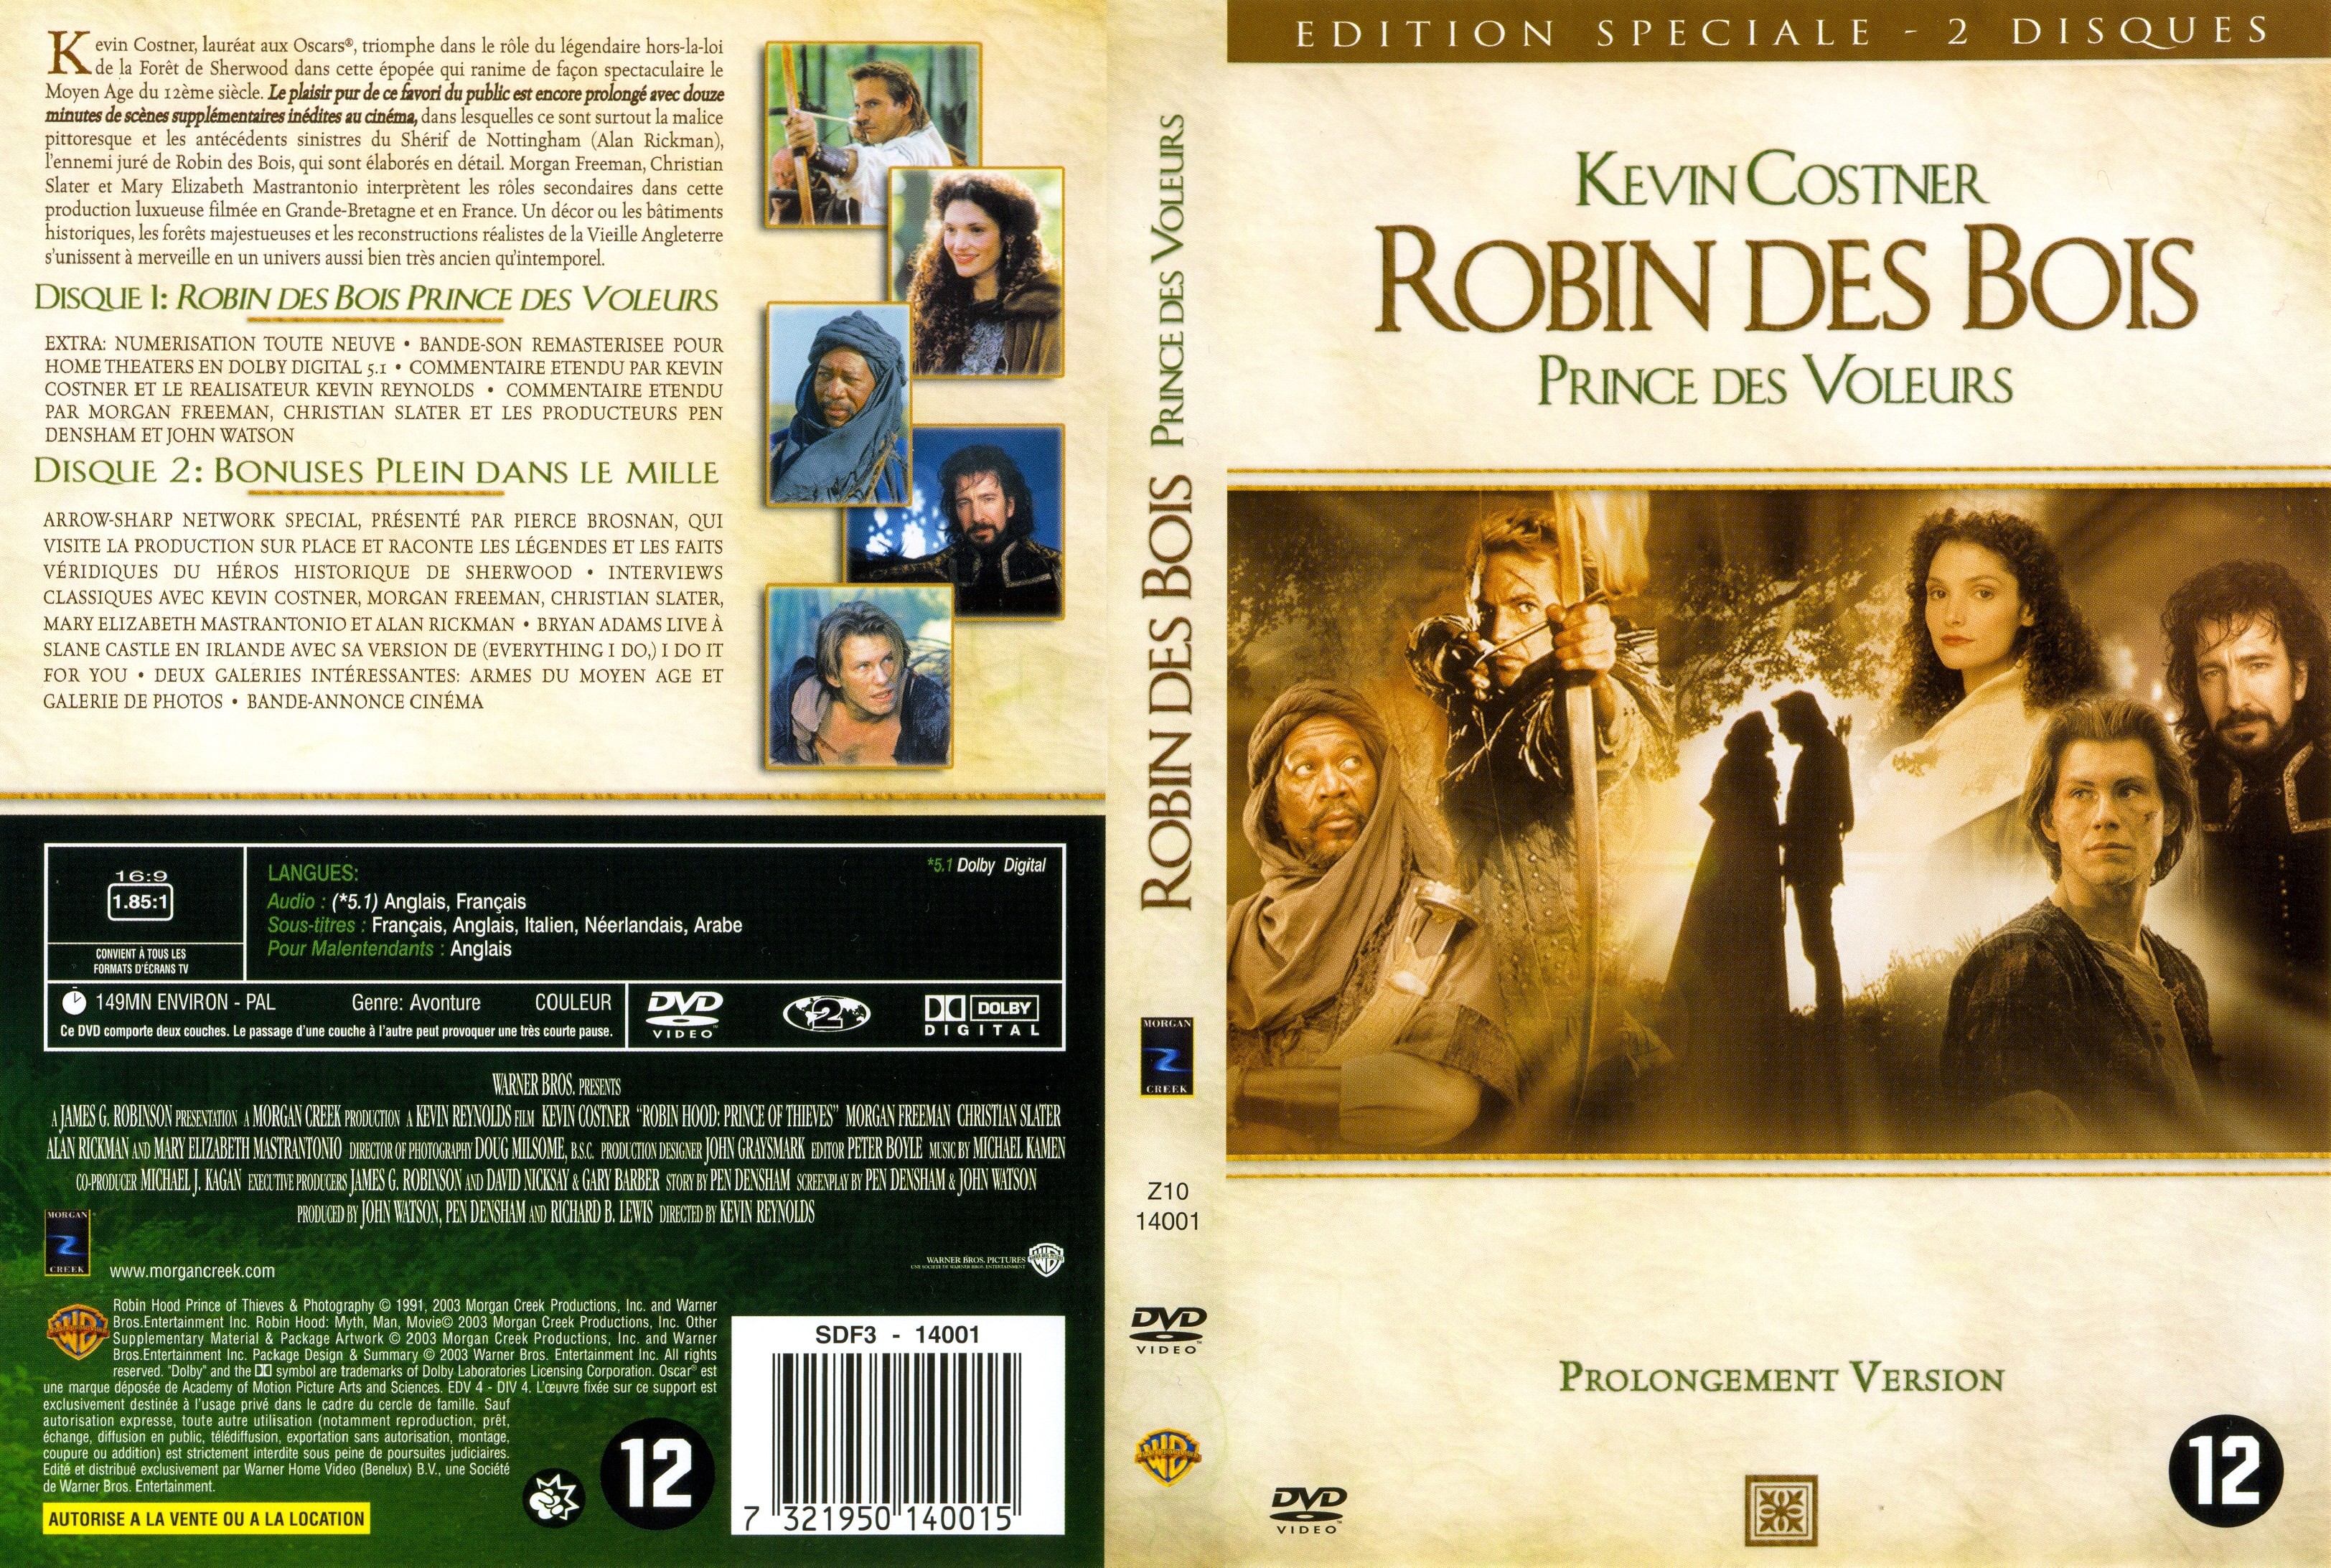 Jaquette DVD Robin des bois prince des voleurs v2